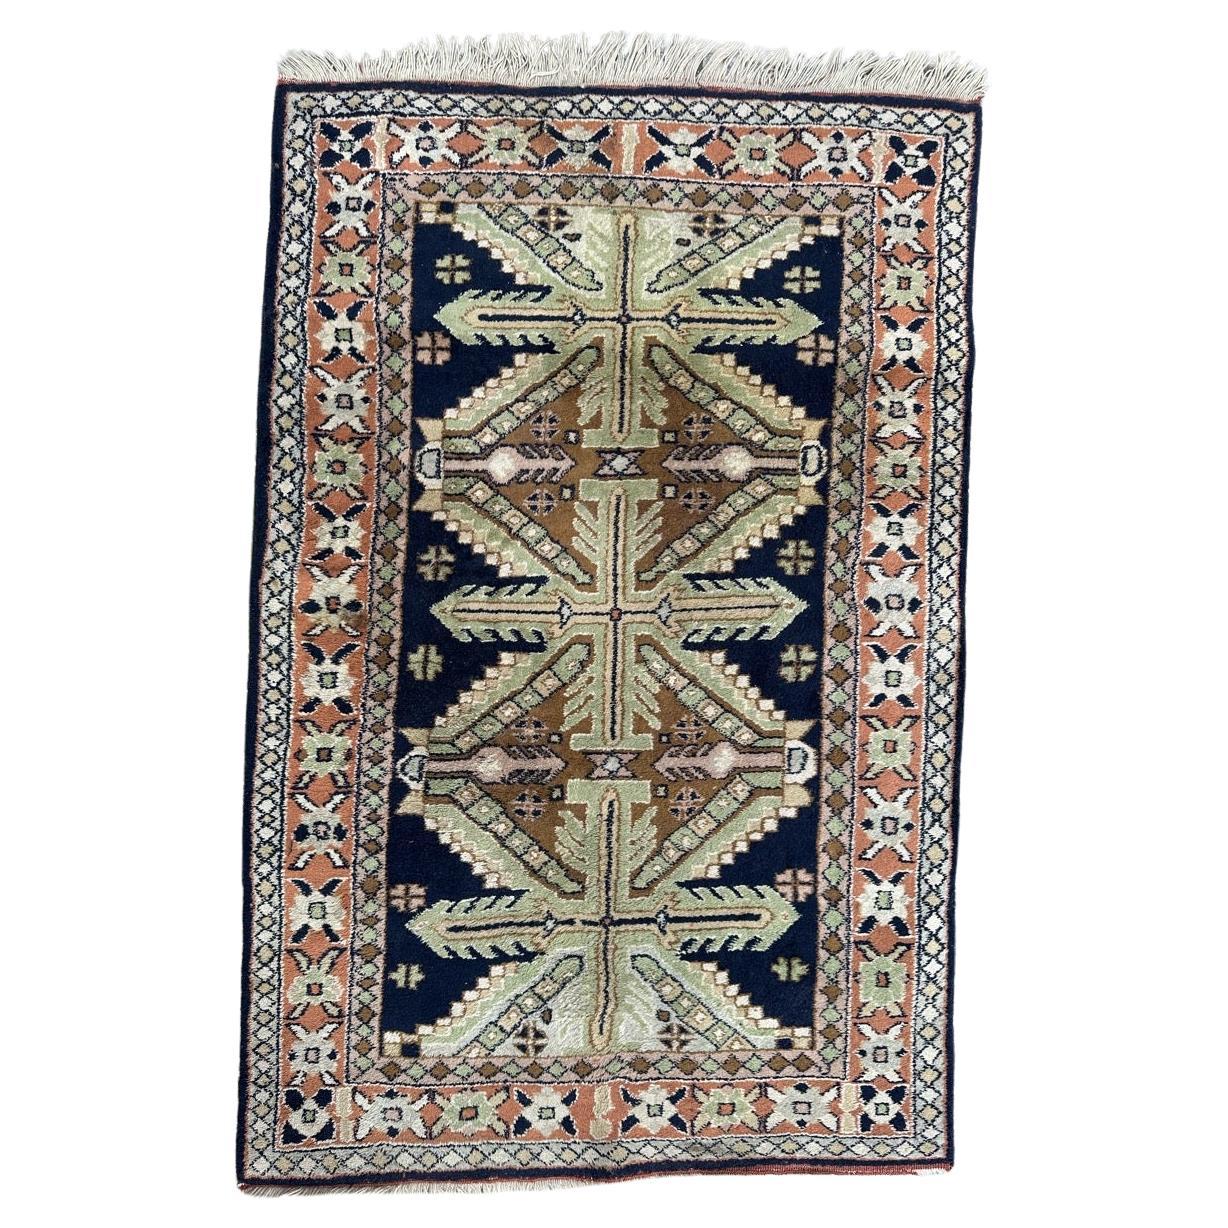 Bobyrug’s pretty vintage Turkish rug 